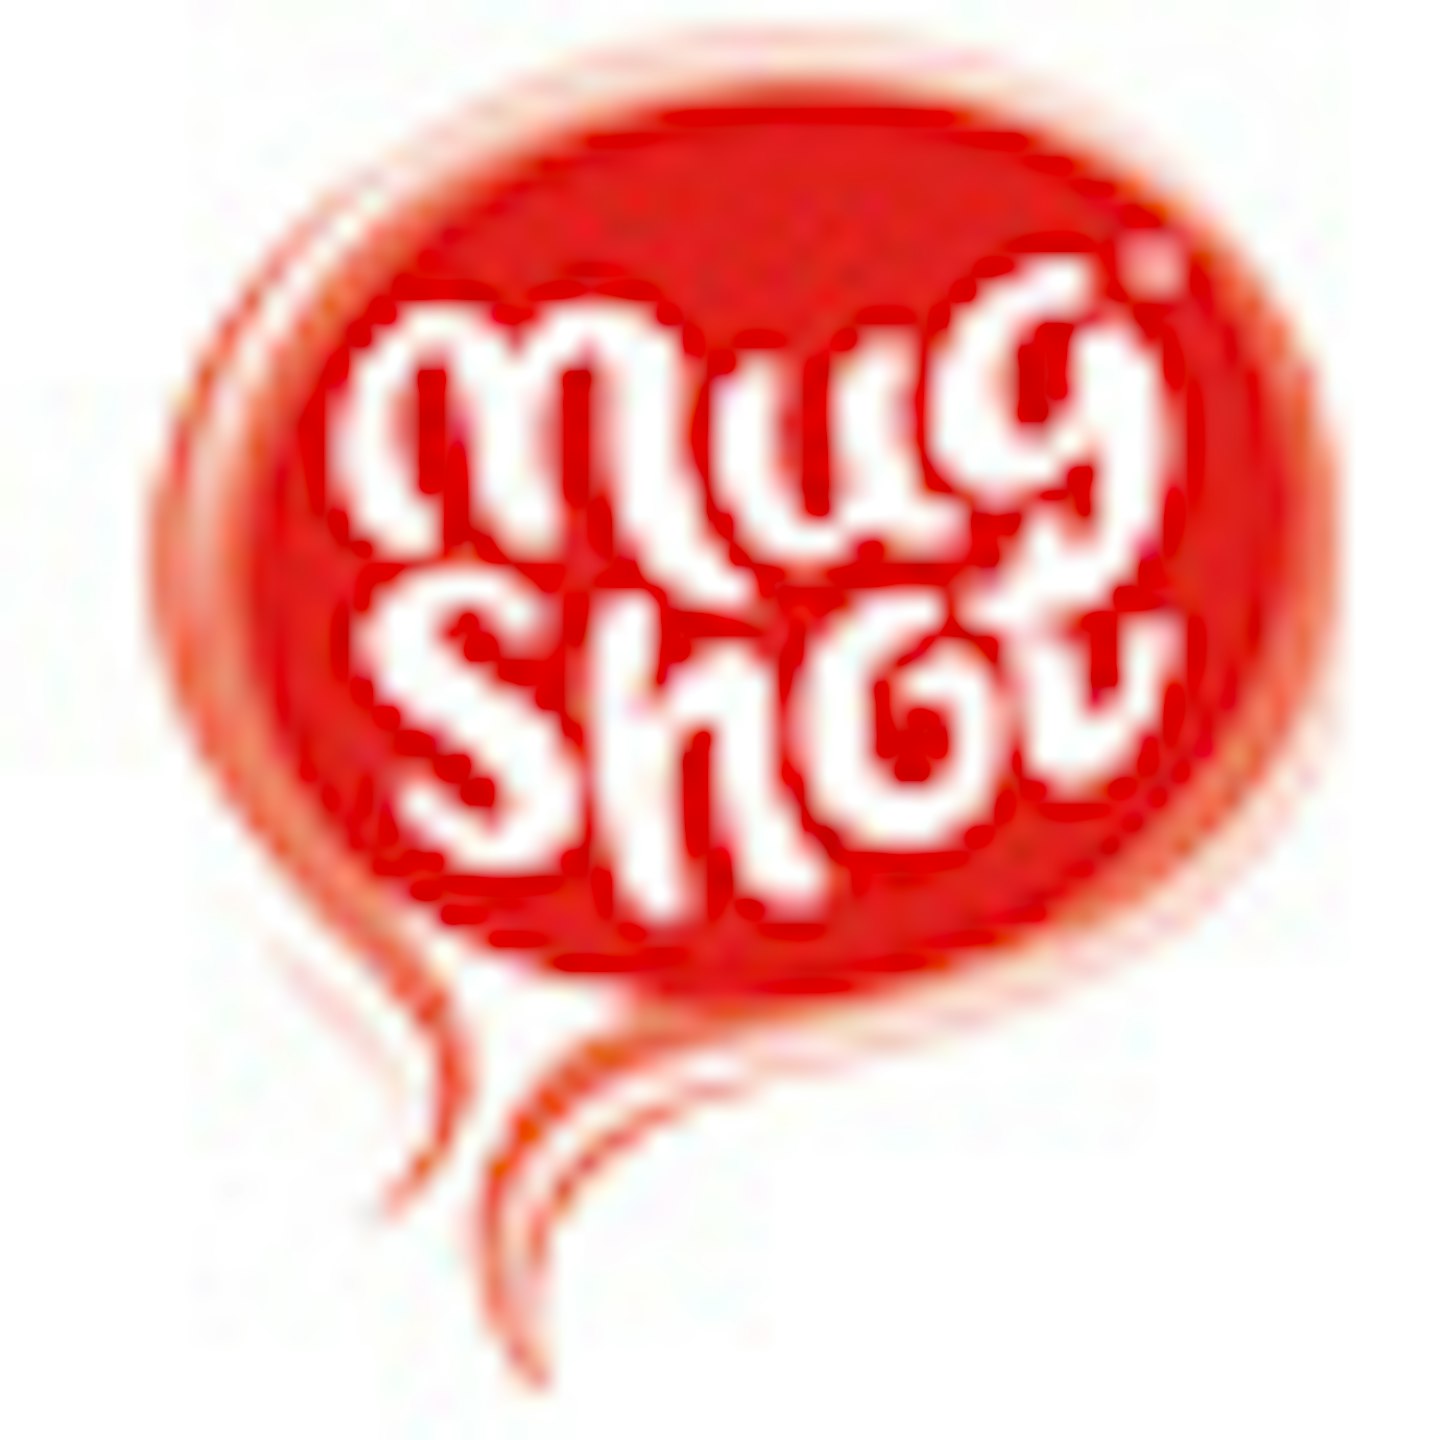 MugShot logo